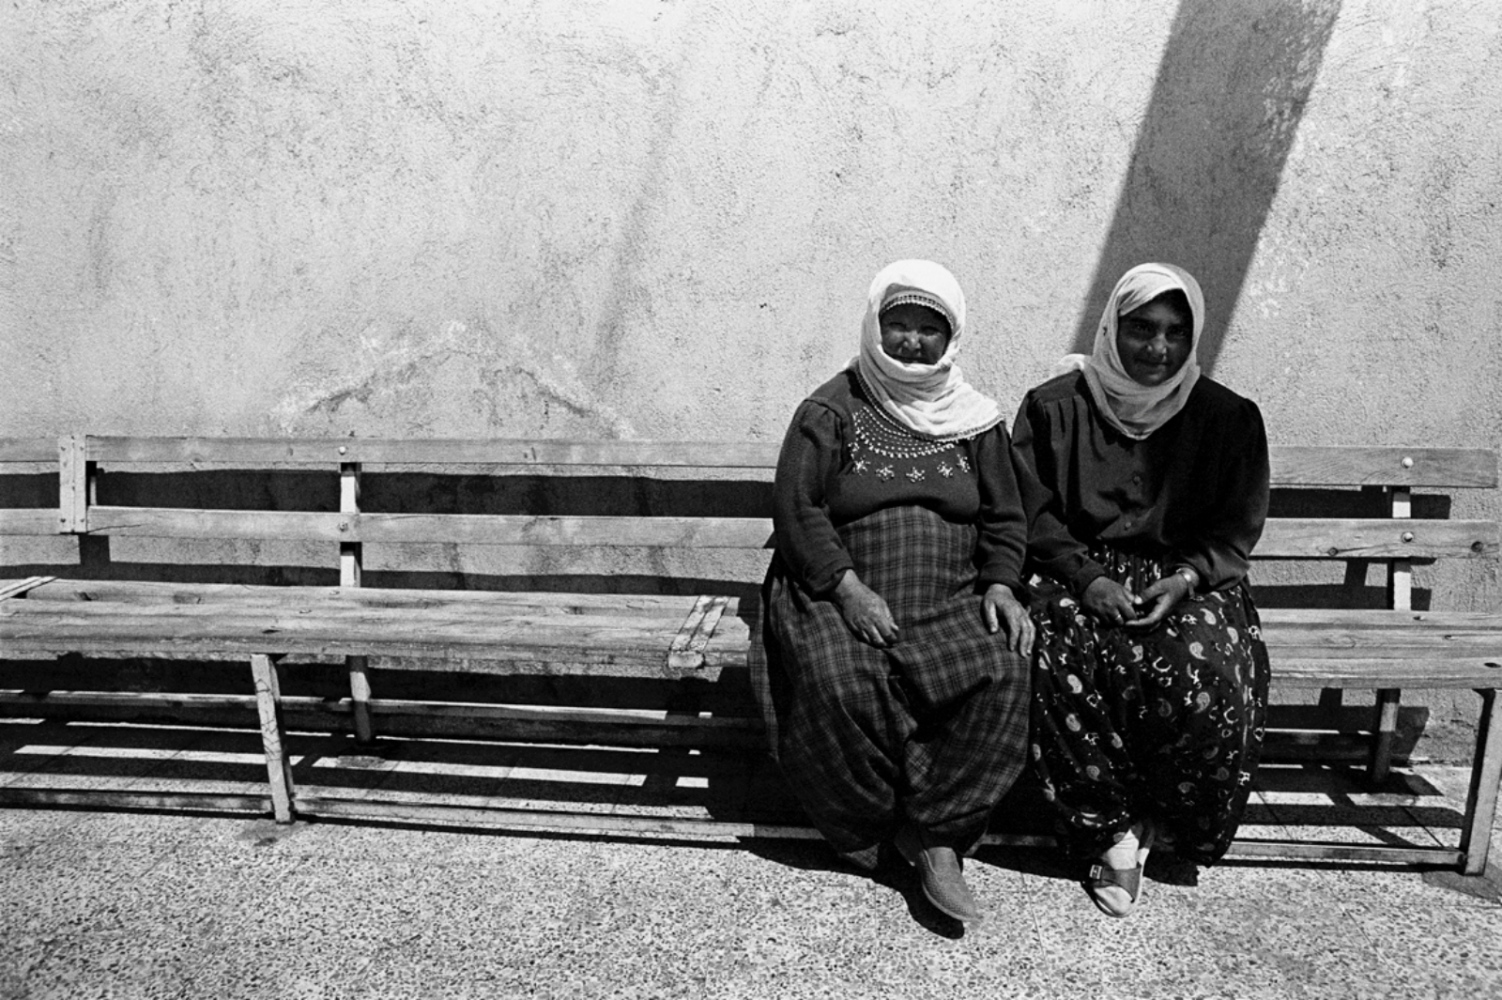 Turkey -  Two Women on Bench, Turkey, Summer 1997 